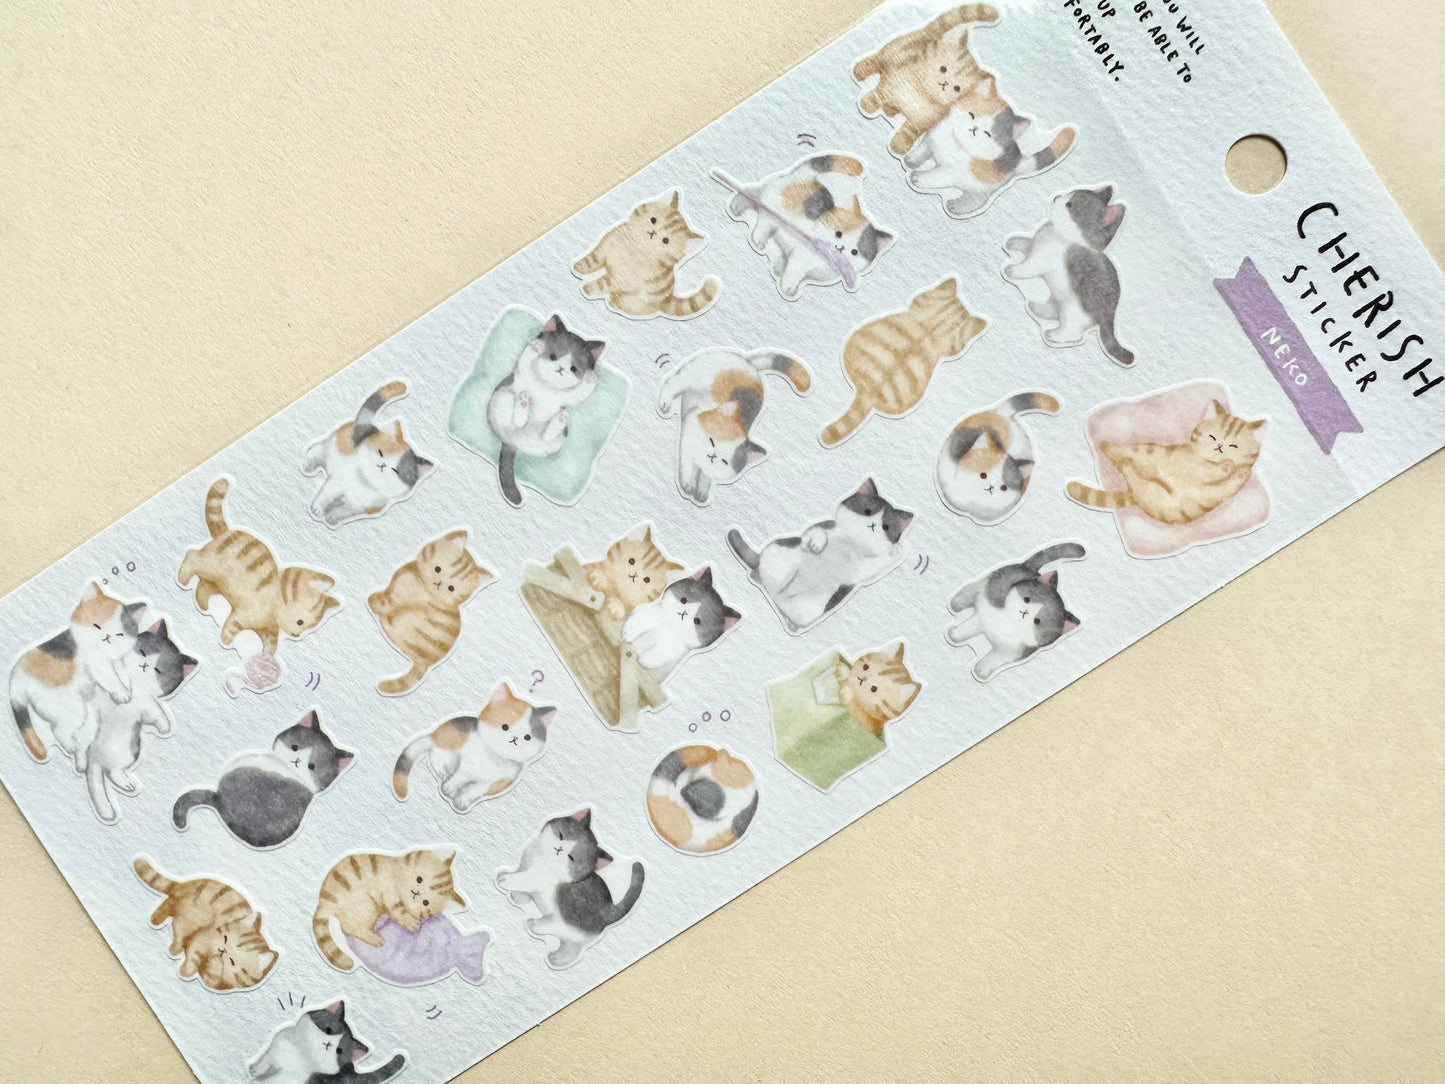 Cherish Sticker Katt